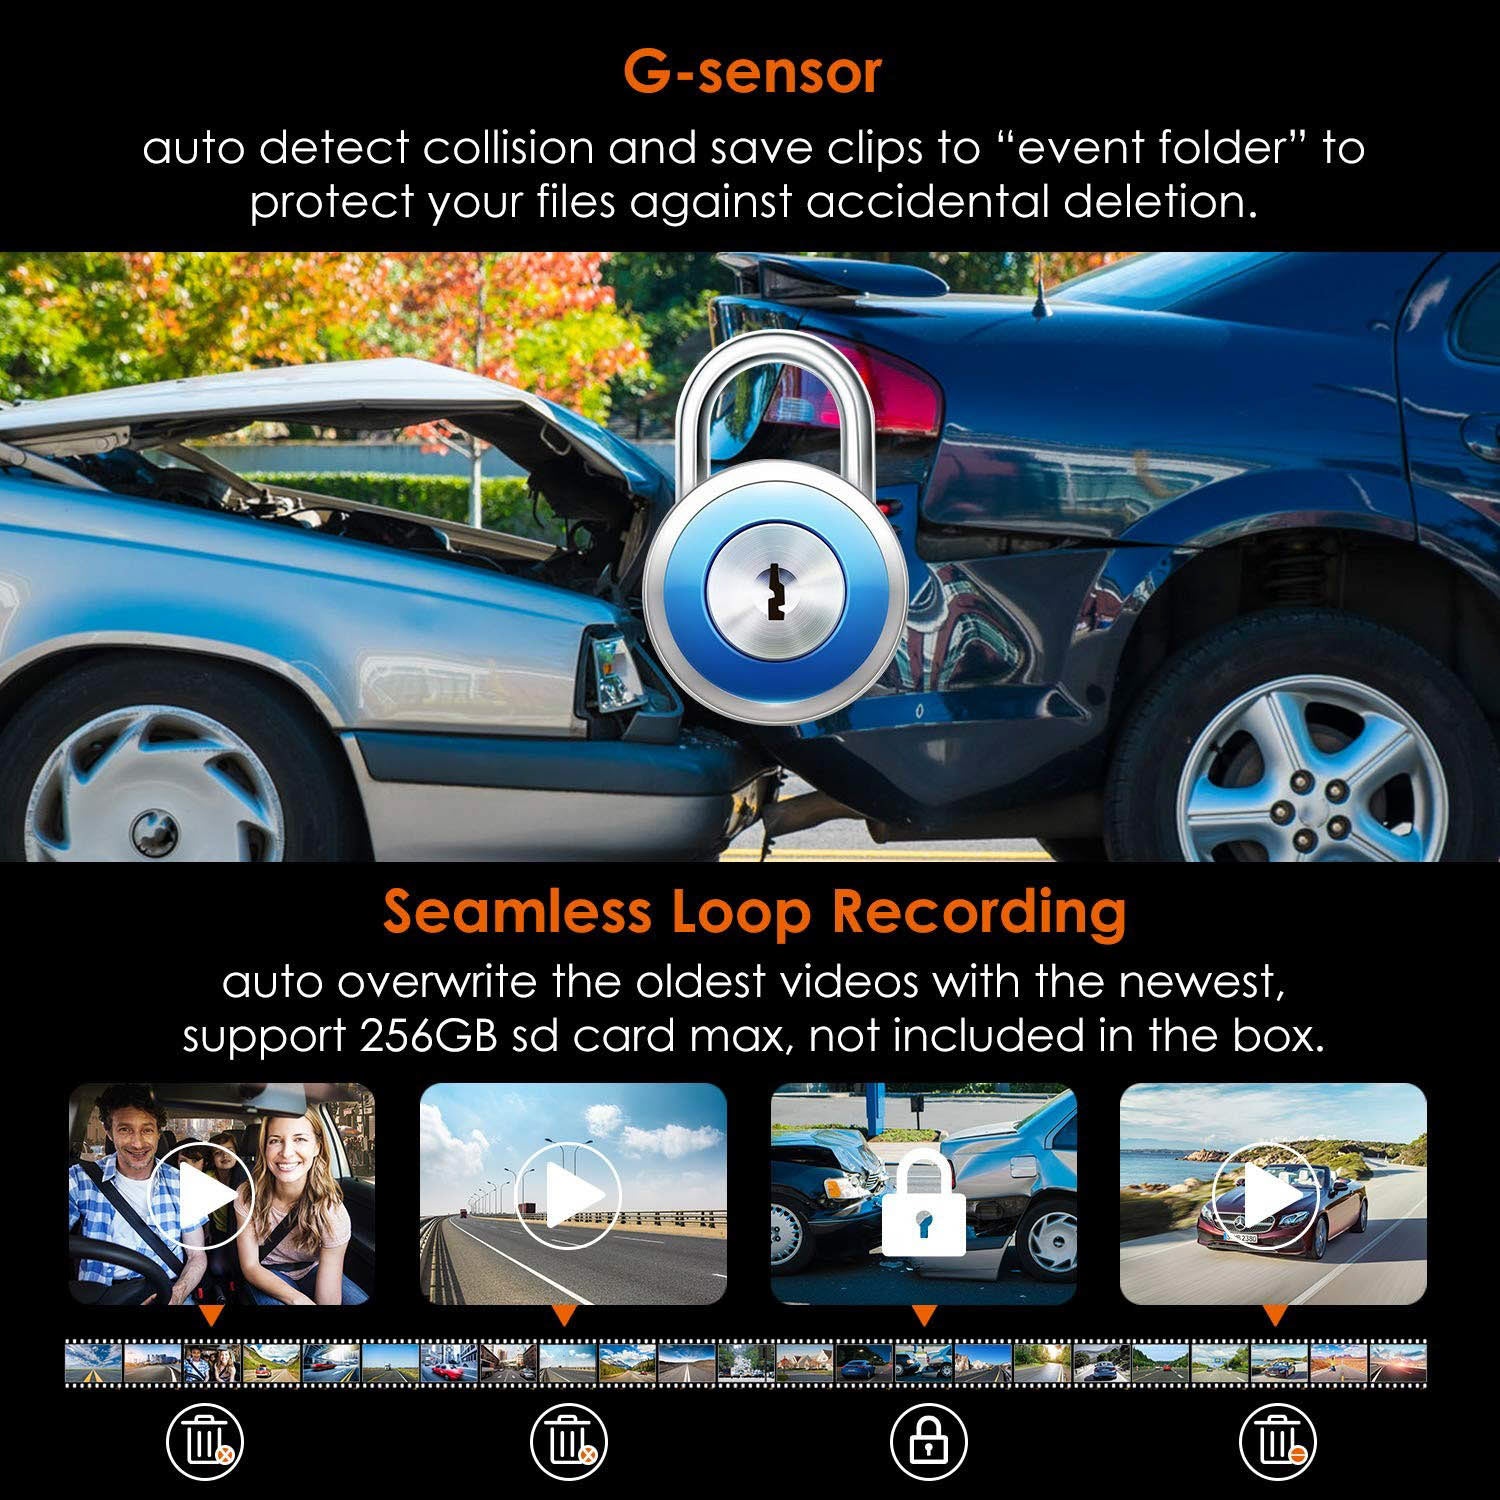 Vantrue N4 3-Channel Dash Cam: Front Inside & Rear Recording